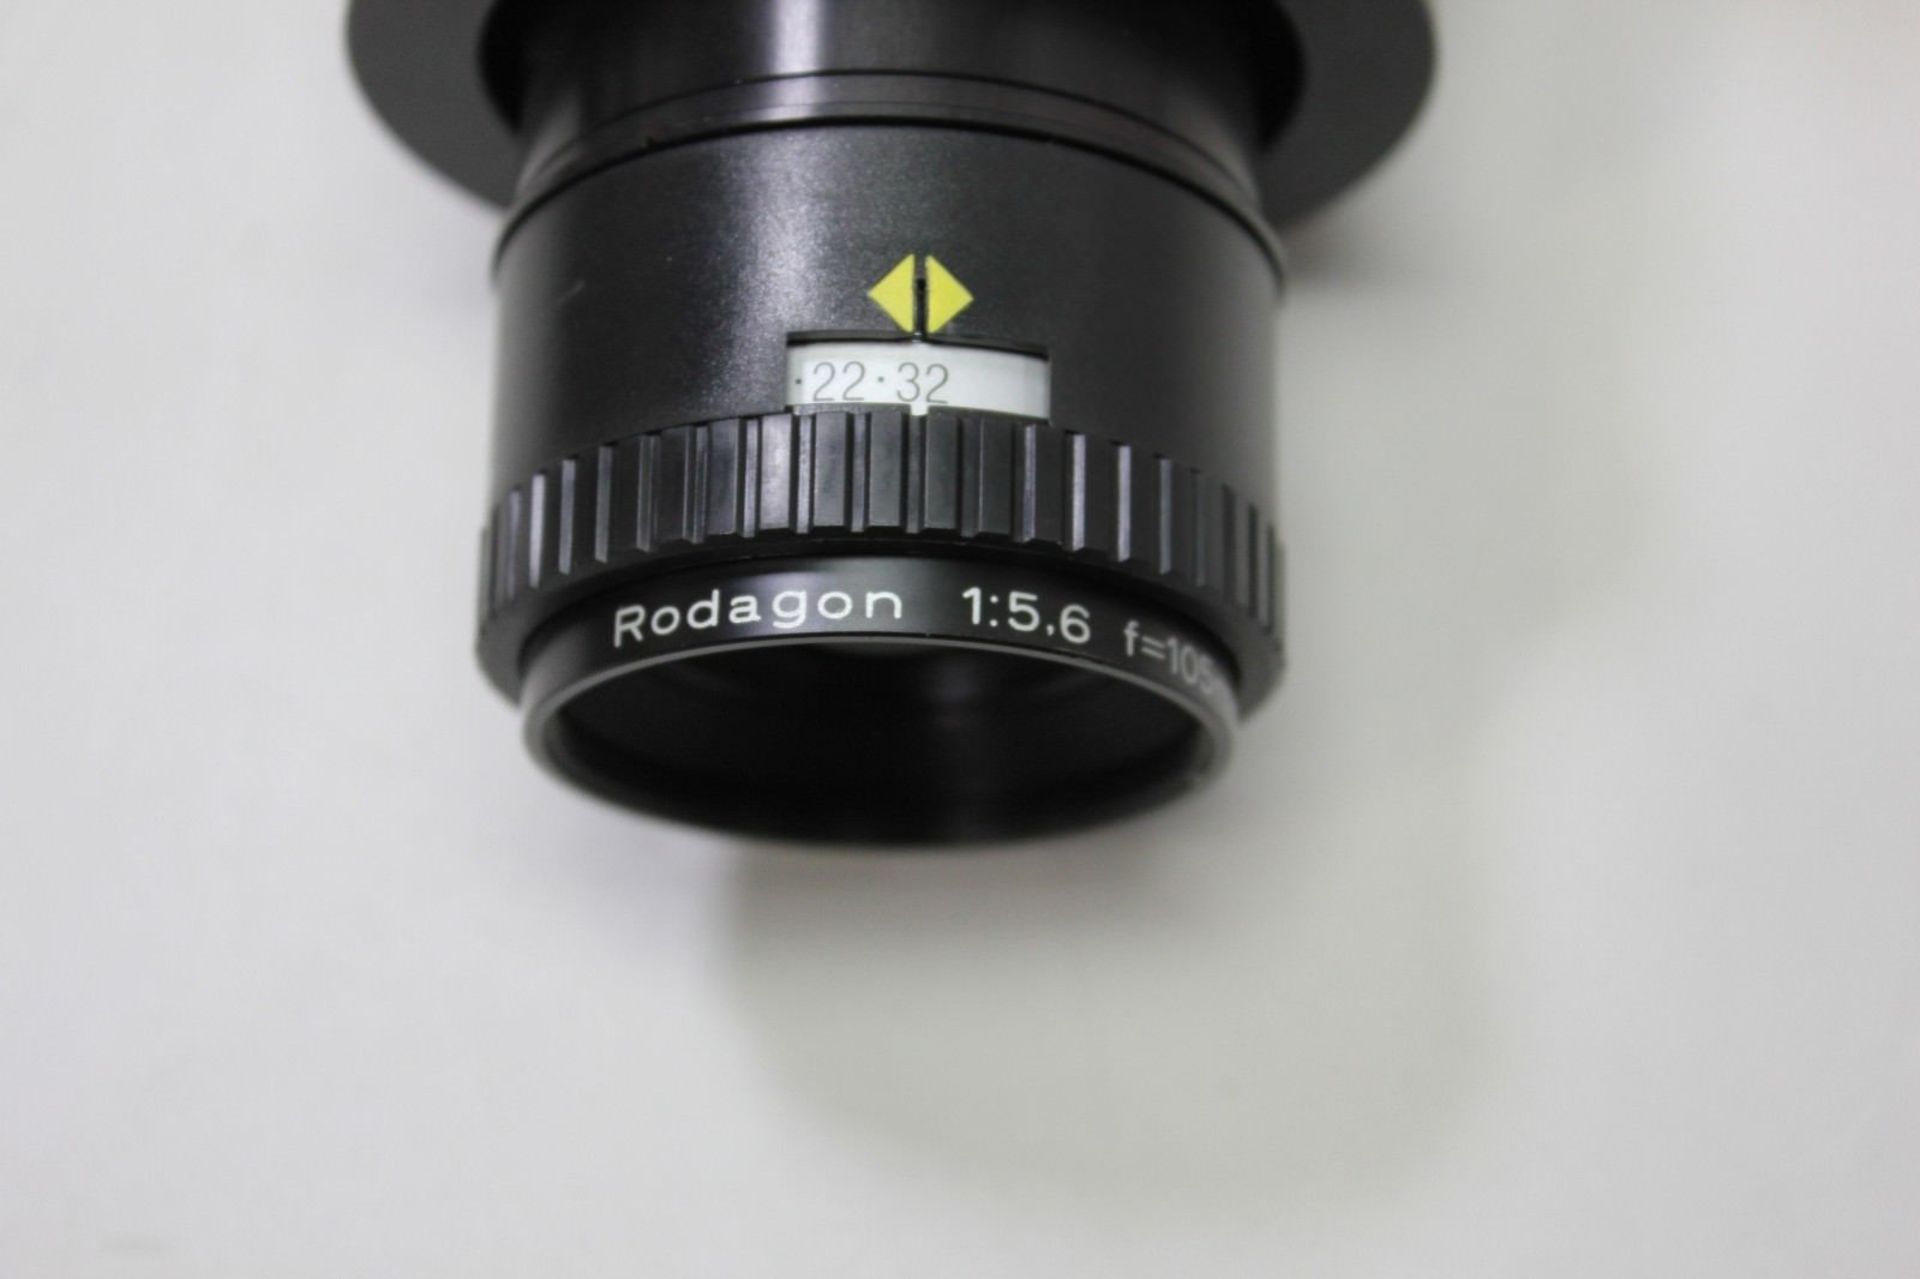 Schafter & Kirchhoff Digital Line Scan Camera With Rodenstock Lens - Image 5 of 5